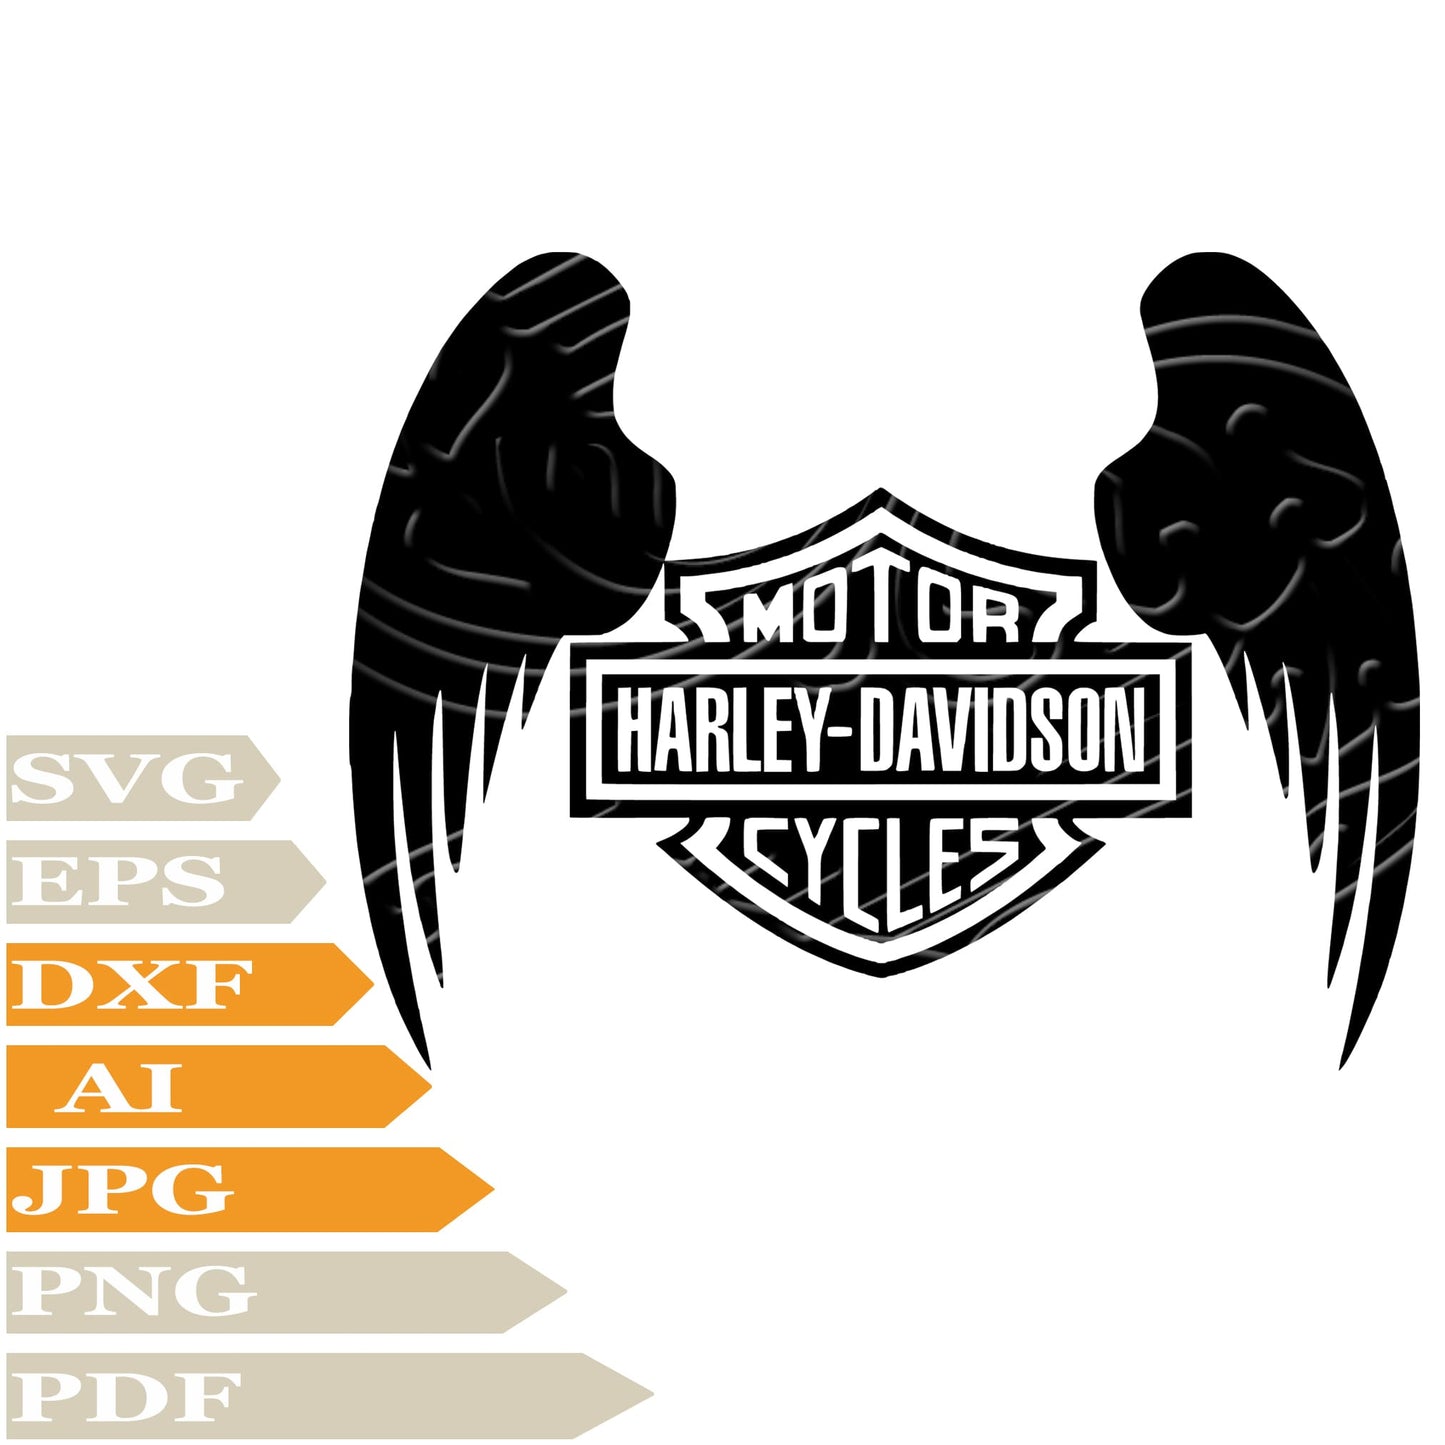 Harley Davidson, Harley Davidson Logo Svg File, Image Cut, Png, For Tattoo, Silhouette, Digital Vector Download, Cut File, Clipart, For Cricut